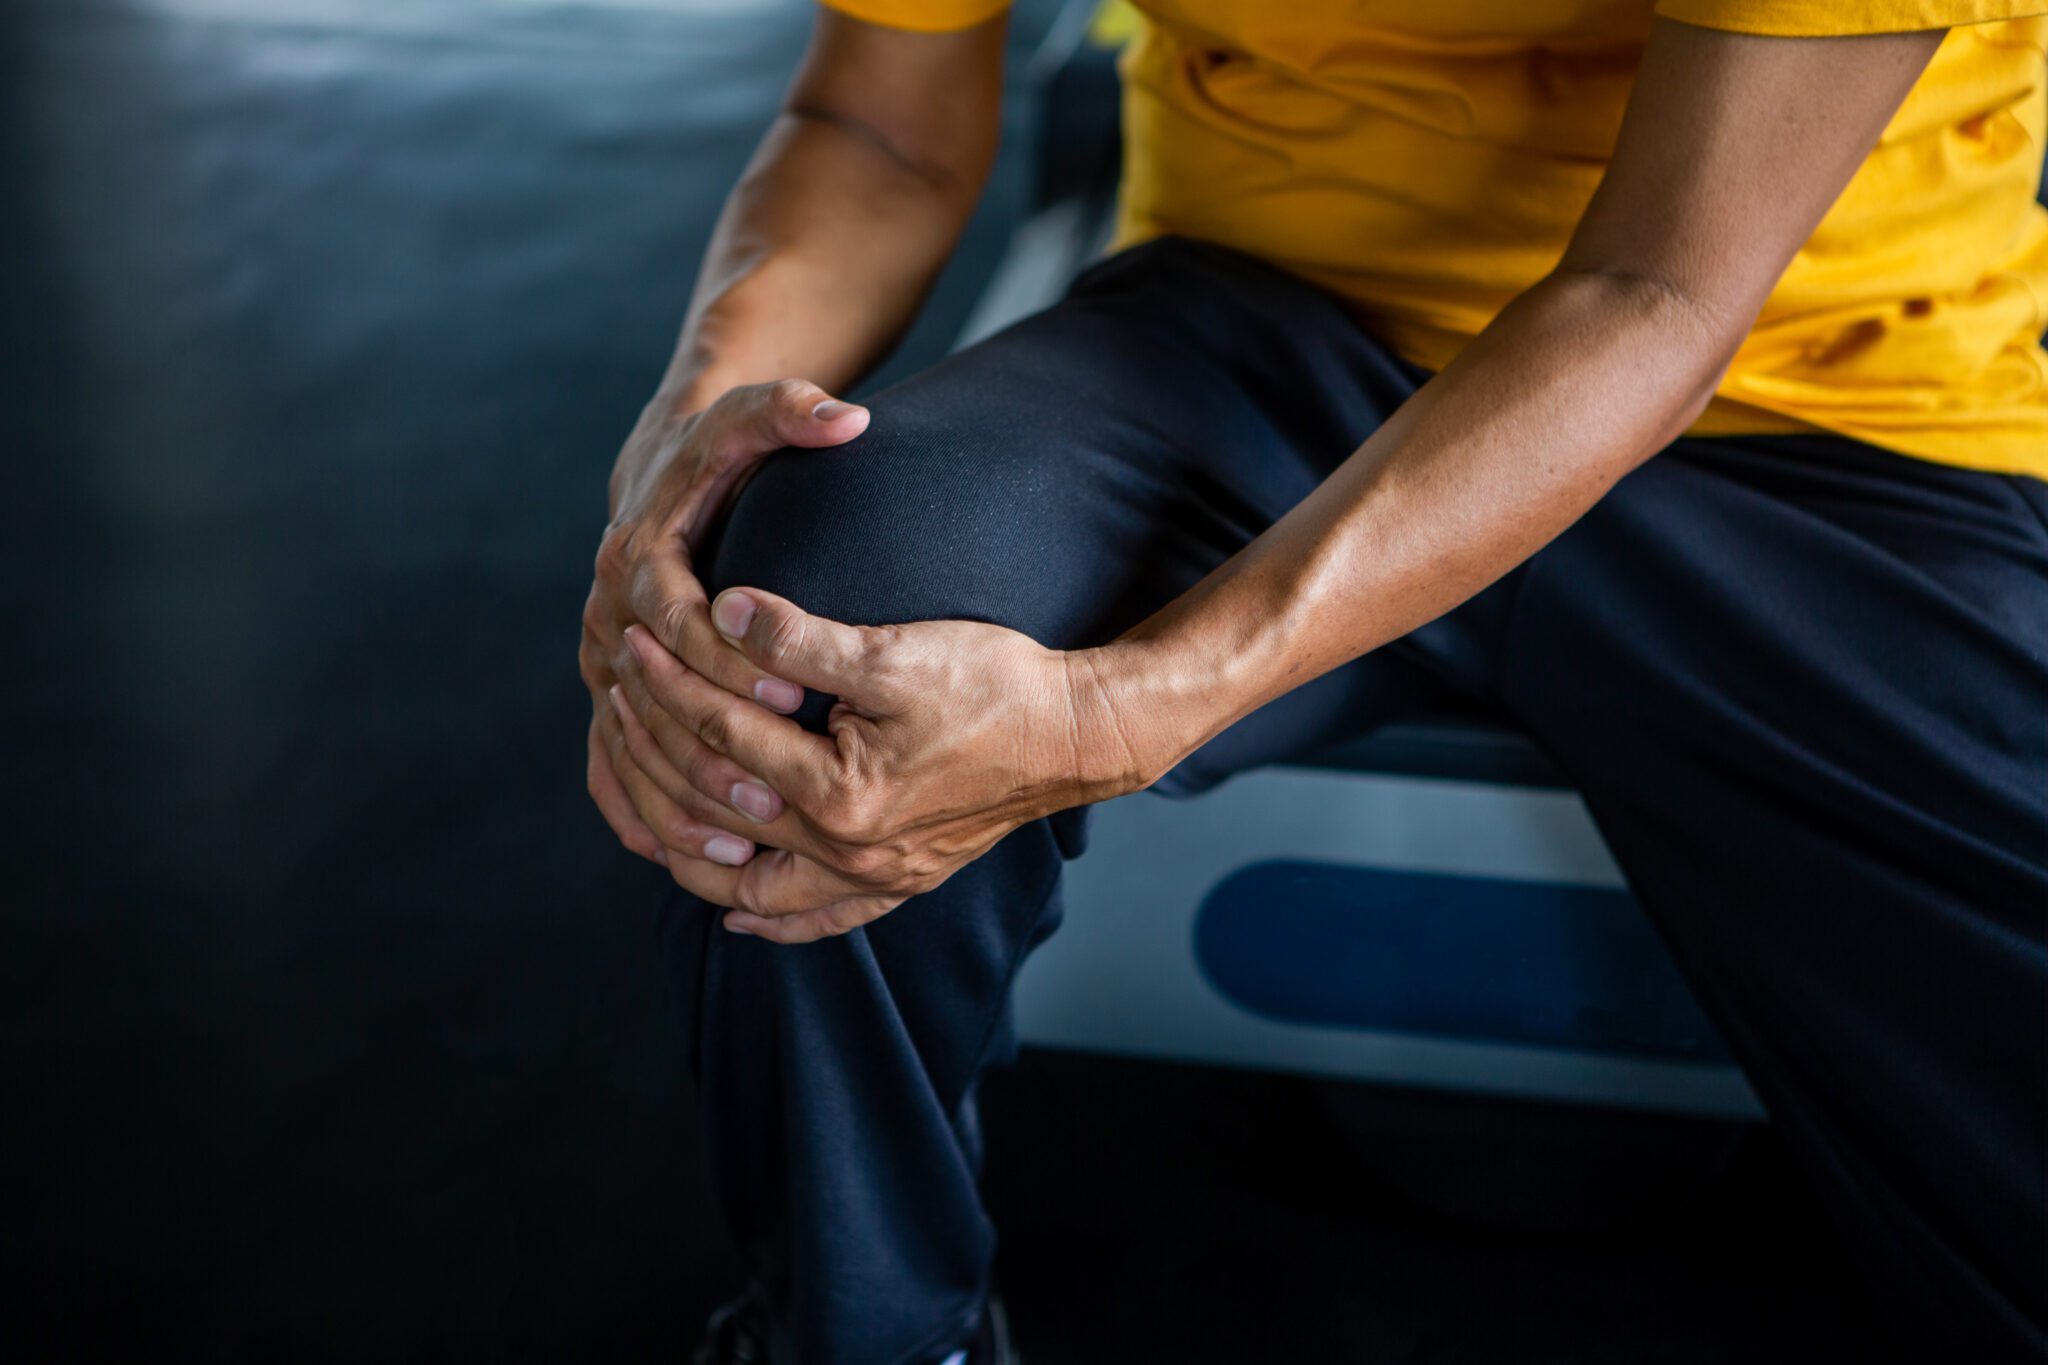 How Rheumatoid Arthritis and Back Pain are Linked